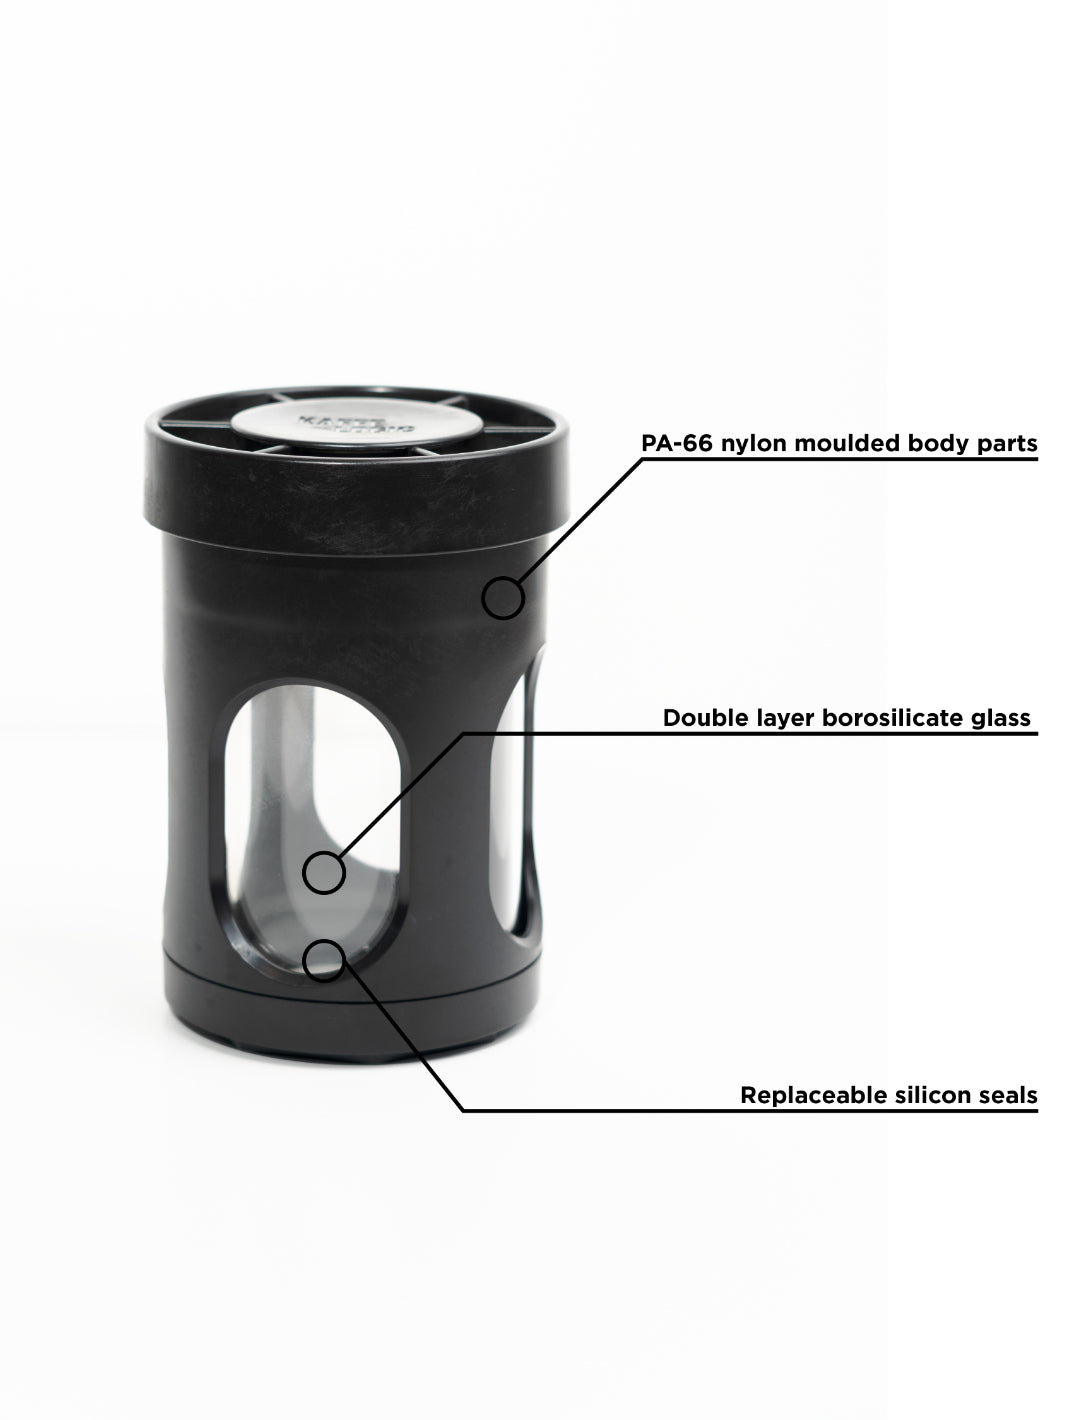 KAFFELOGIC Nano 7 Coffee Roaster (120V)